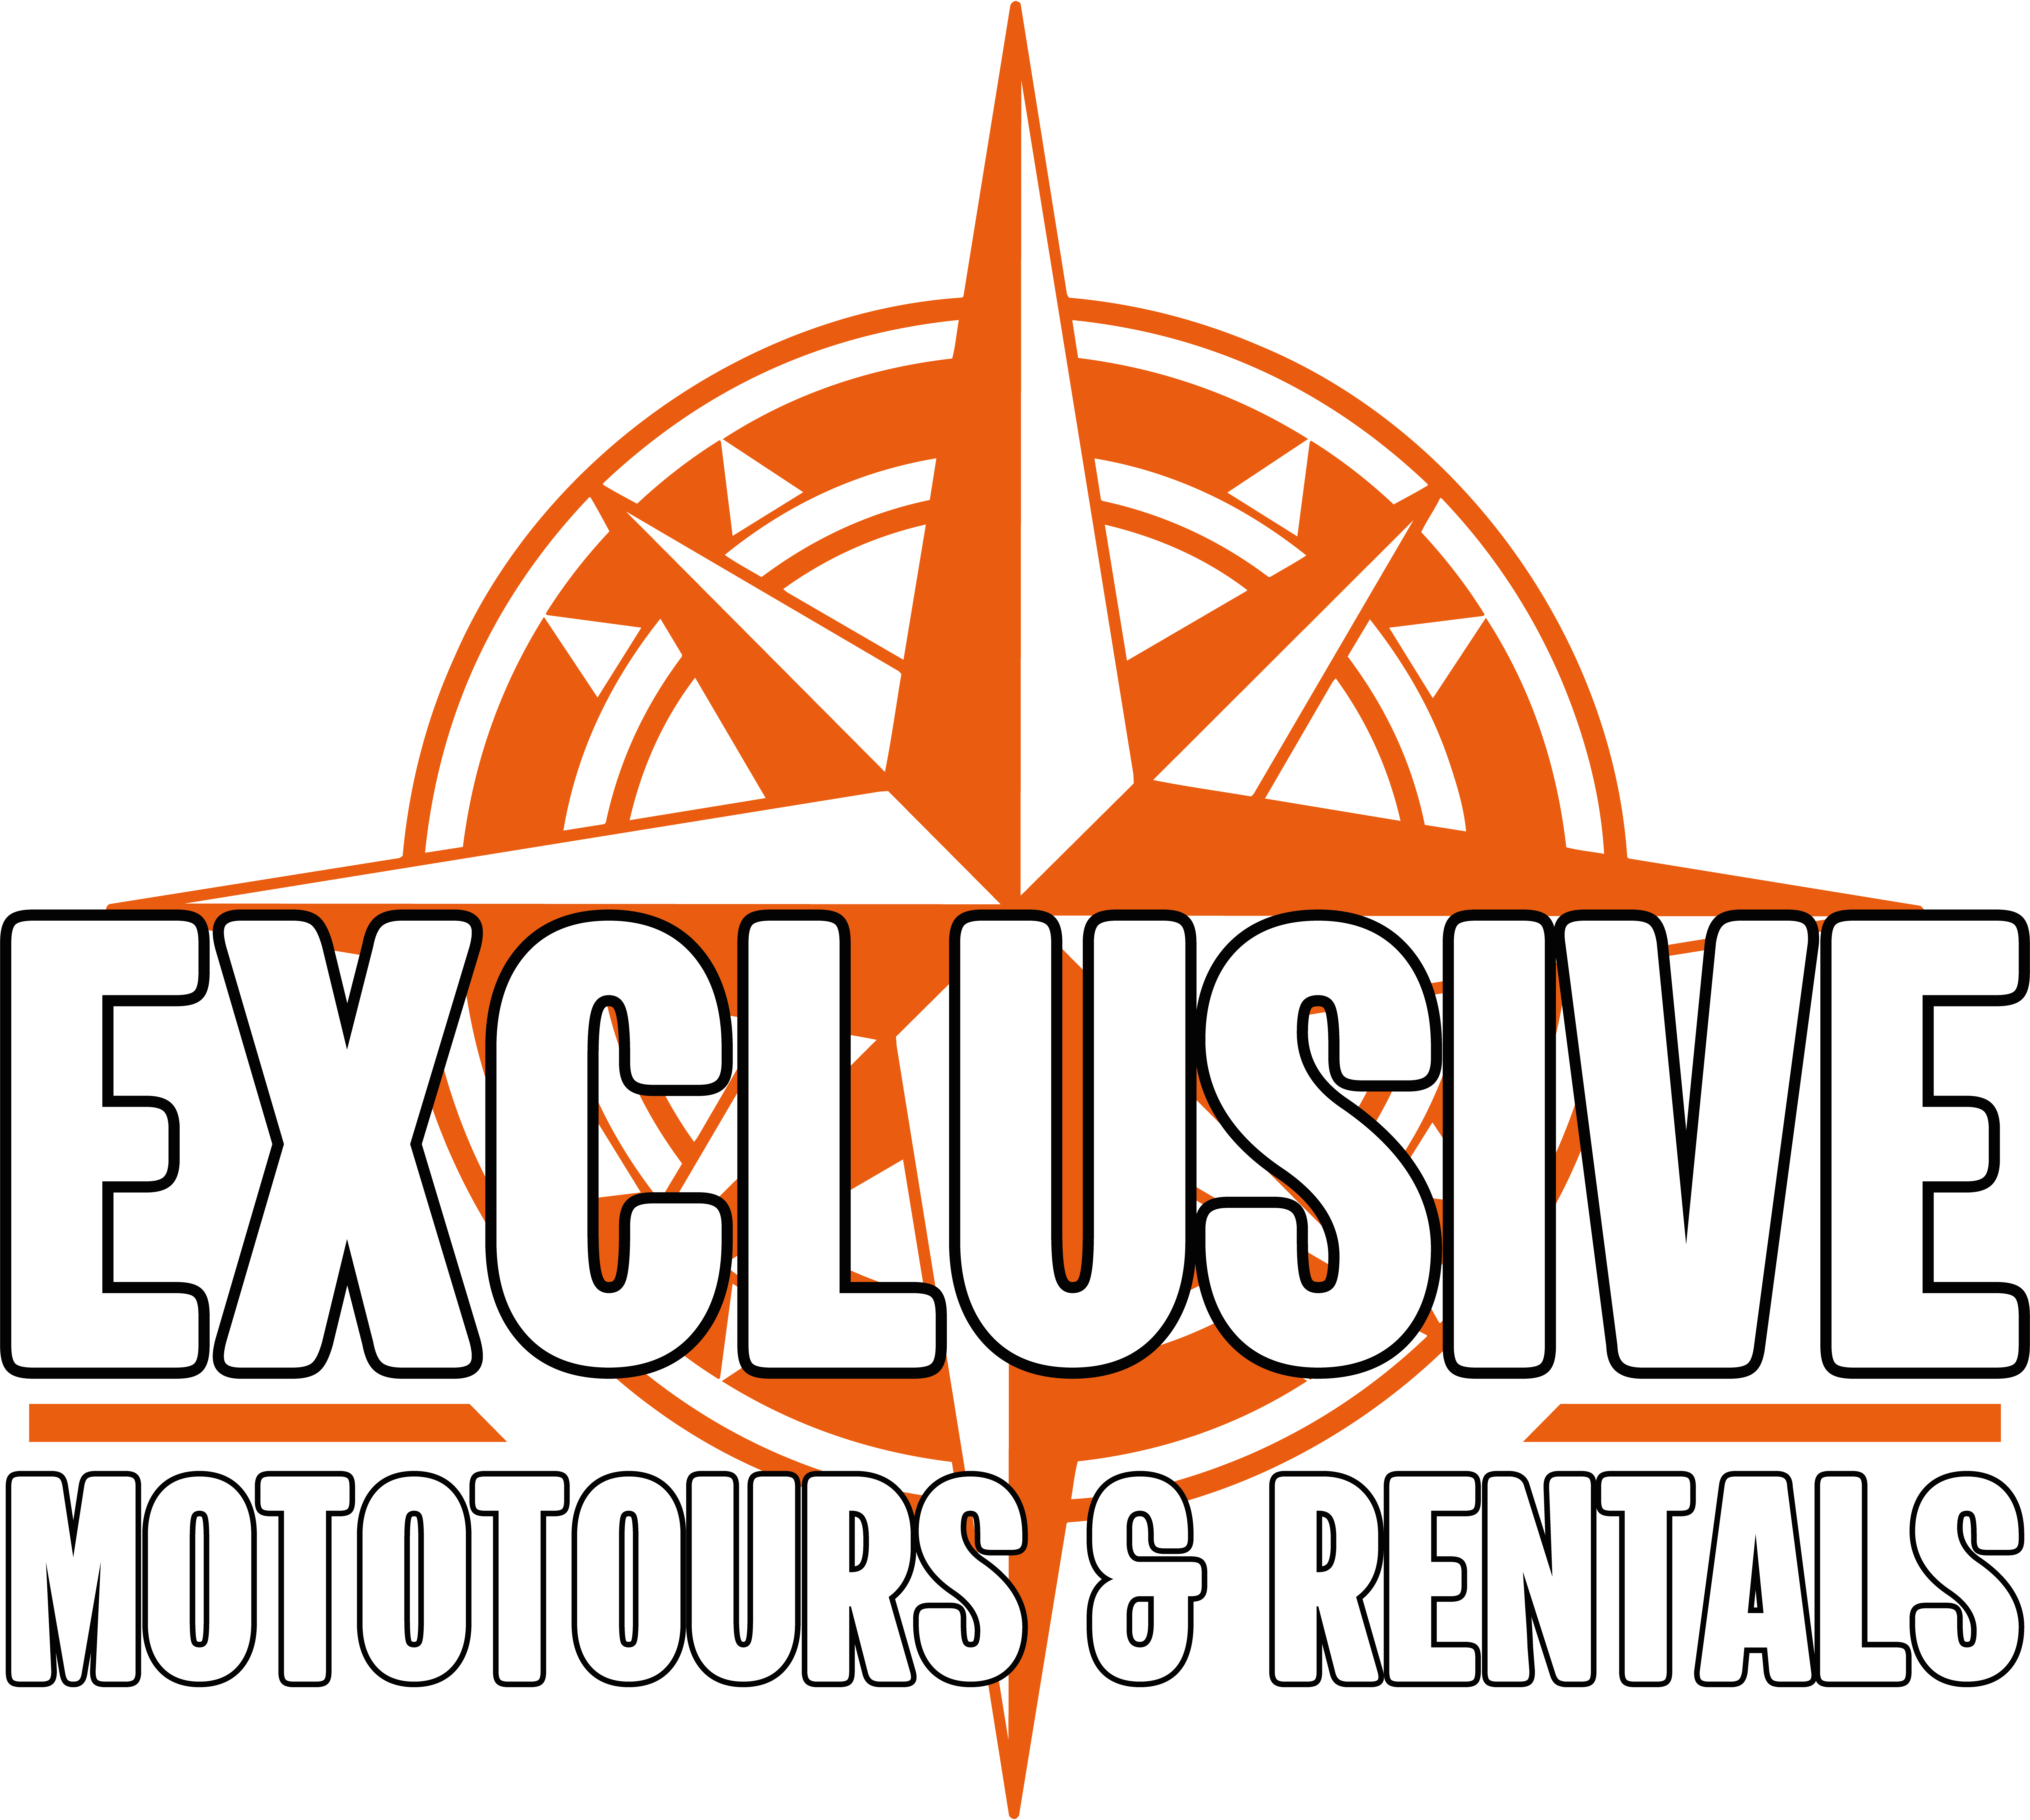 Exclusive Mototours & Rental